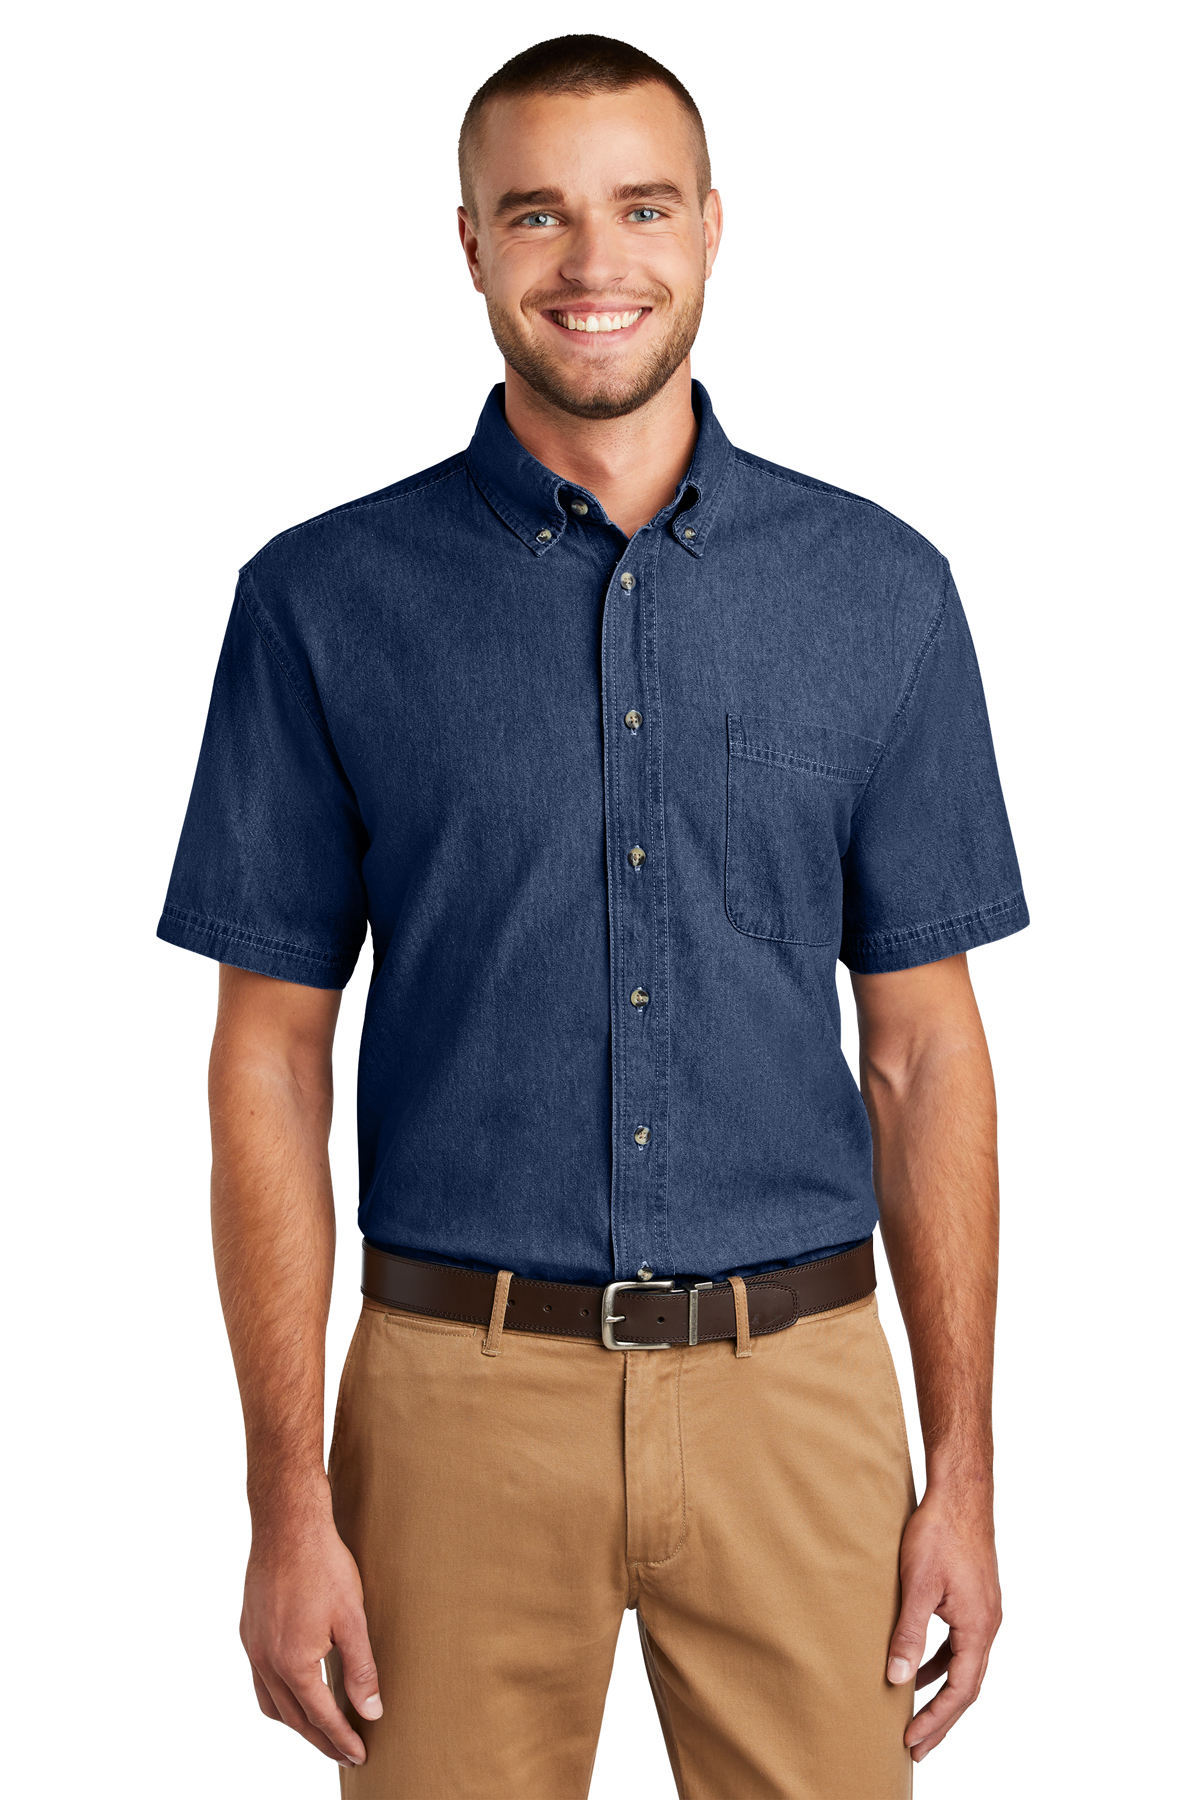 Port & Company Mens Short Sleeve Value Denim Shirt